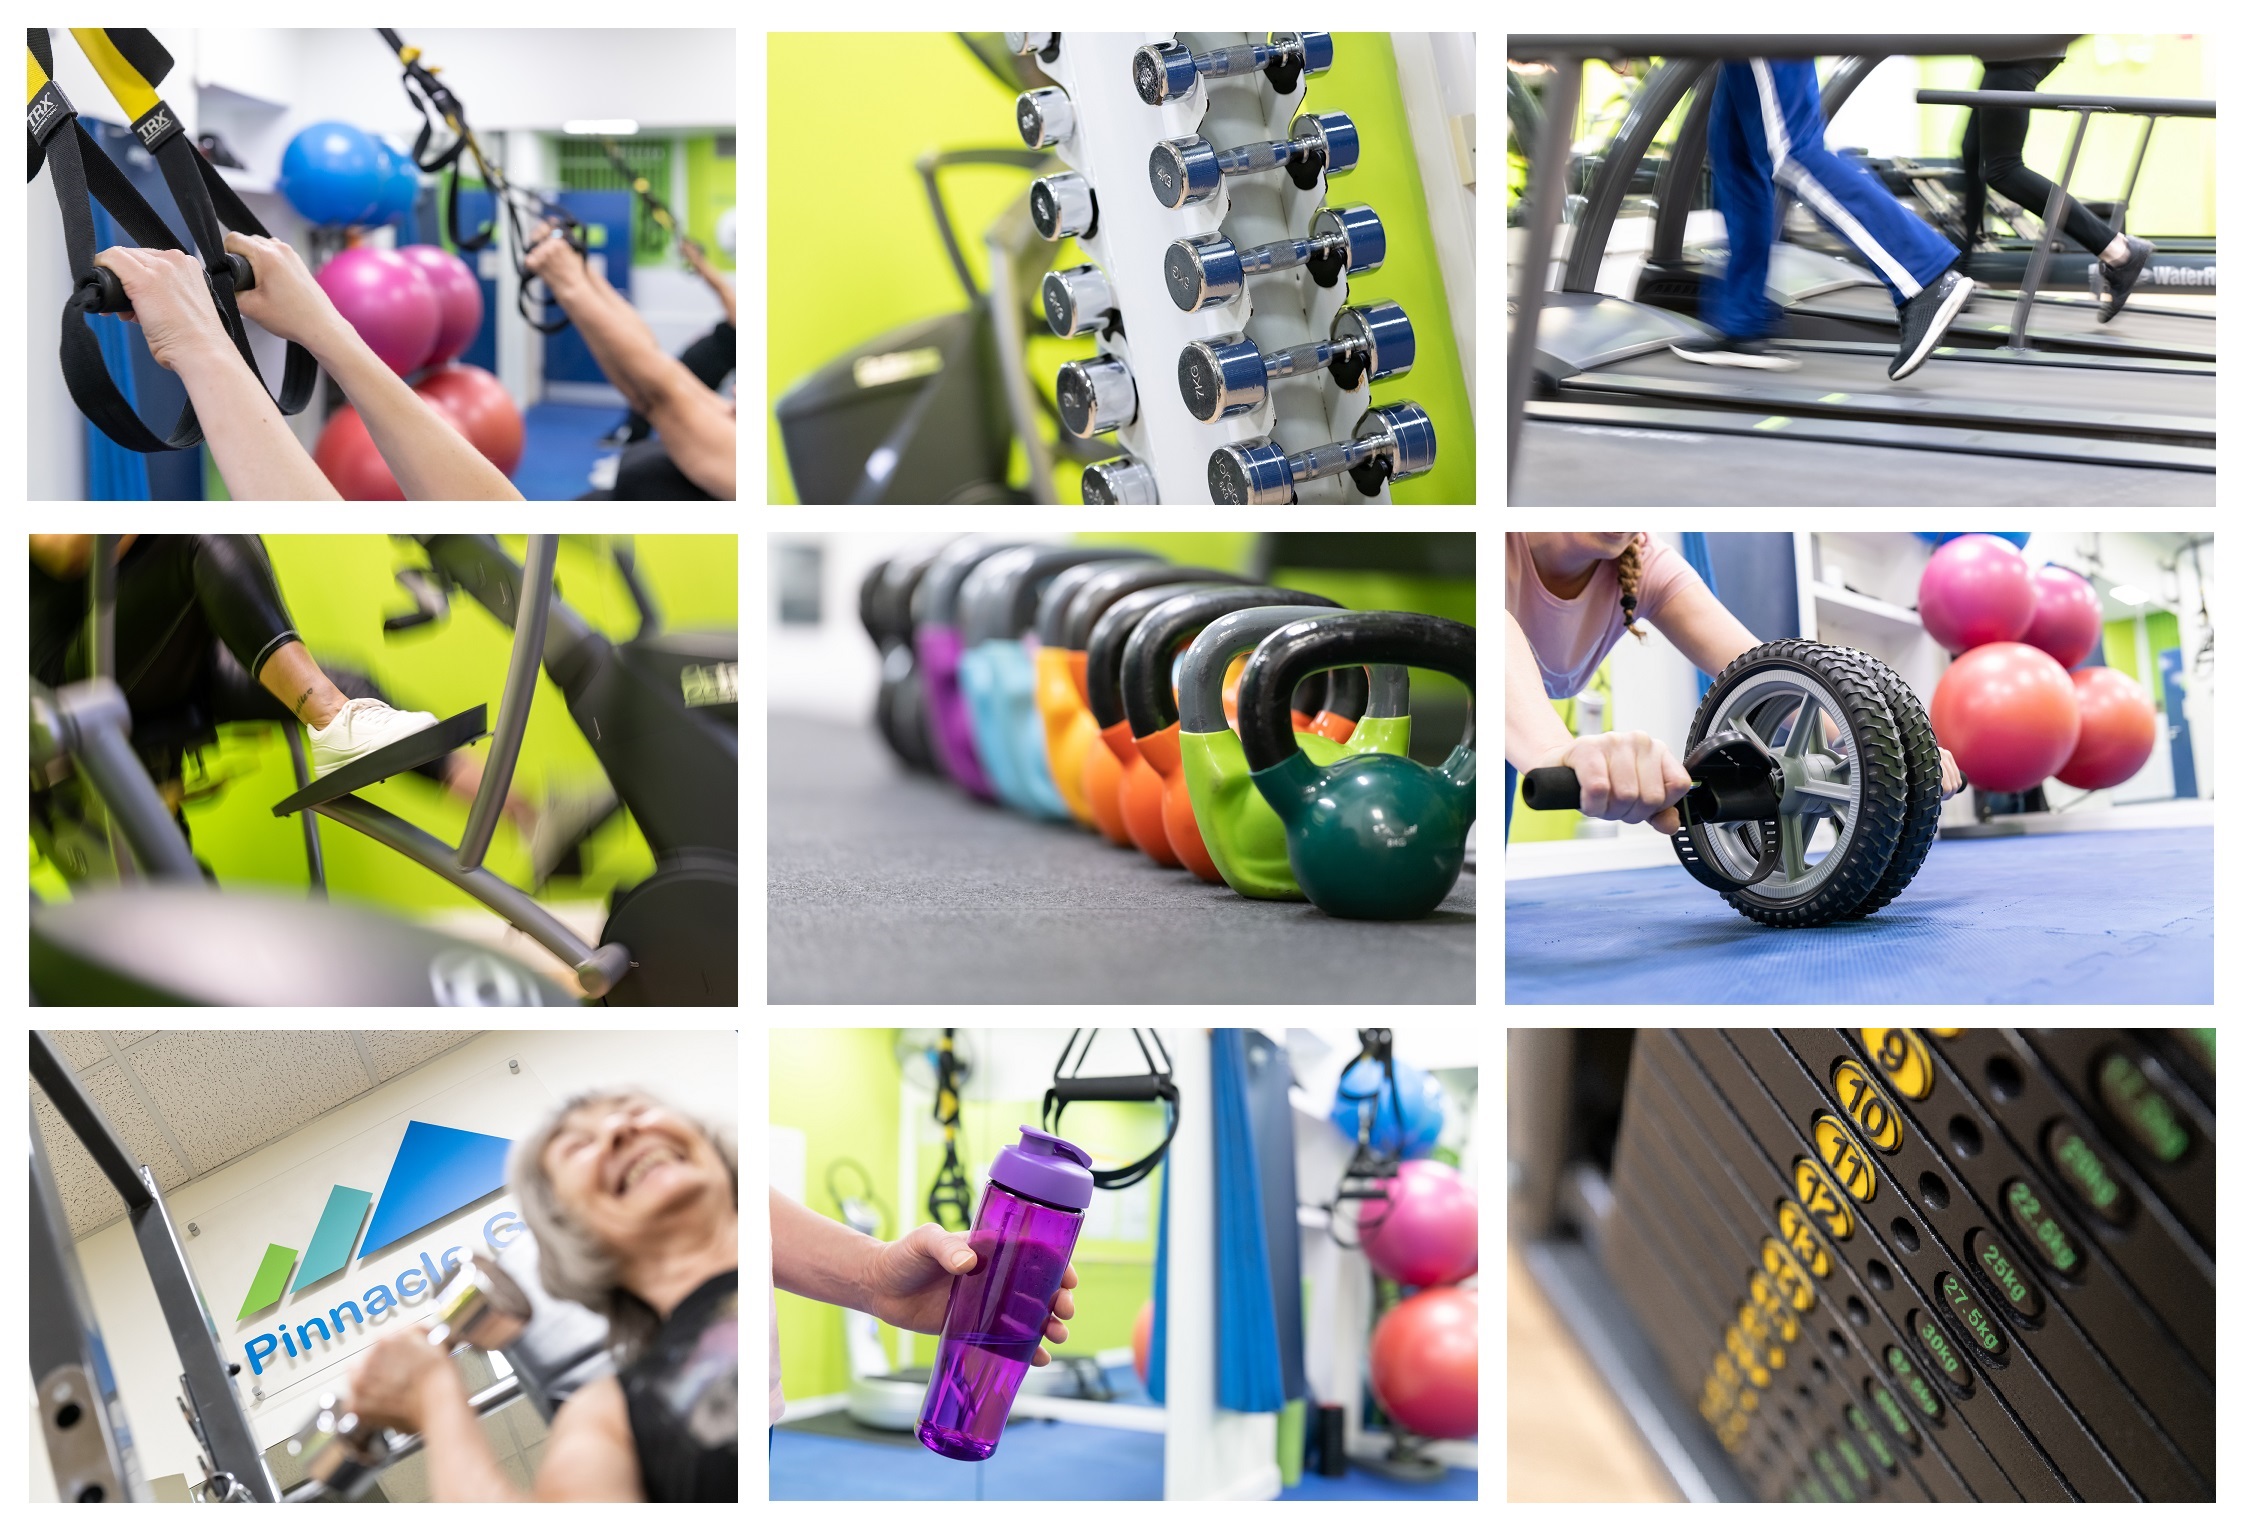 Free weights room at Pinnacle Gym at St Mary's Hospital in Paddington